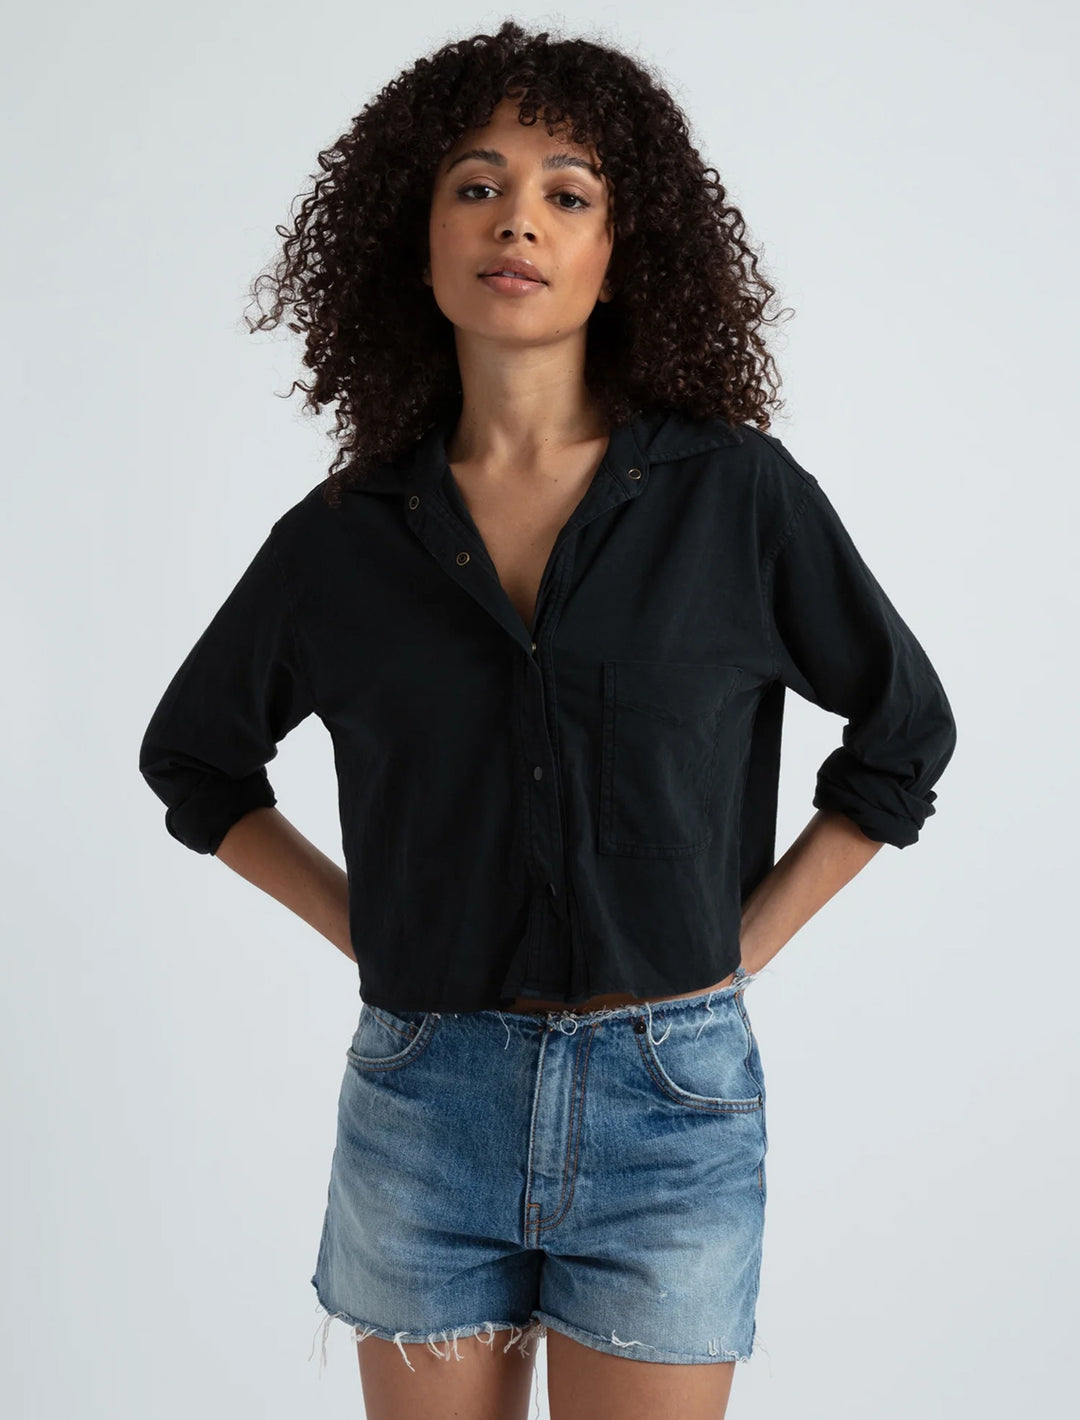 Model wearing ASKK NY's crop knit shirt in stone black.